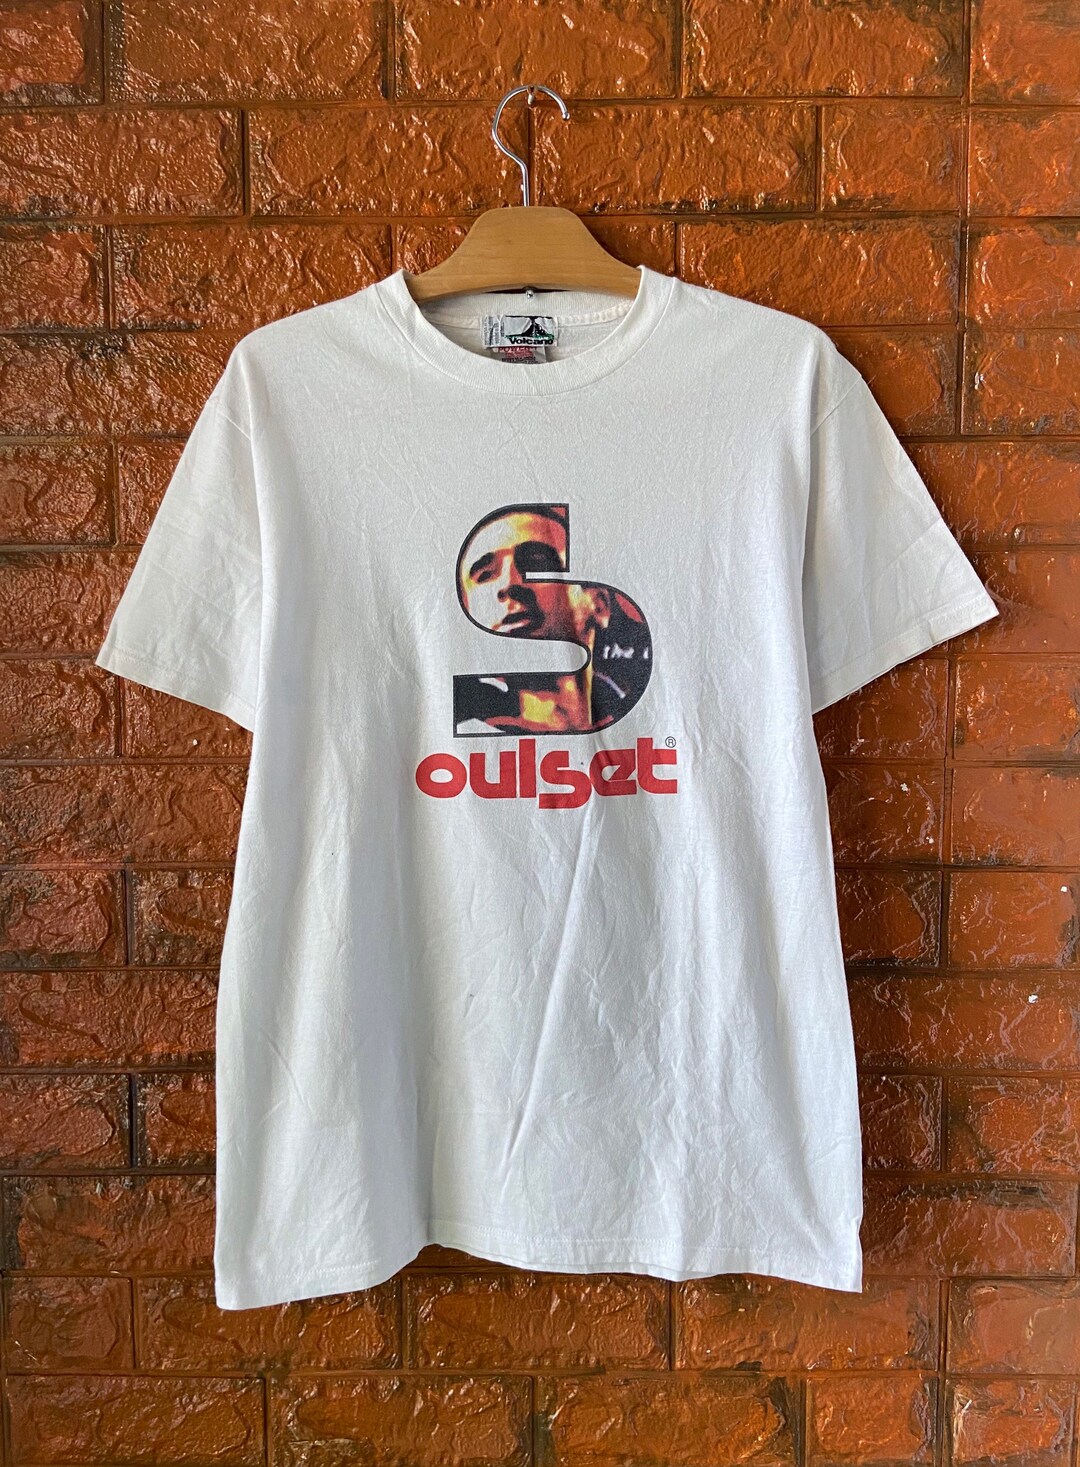 Vintage 90s Volcano Oulset eric Cantona Streetwear Brand T Shirt ...